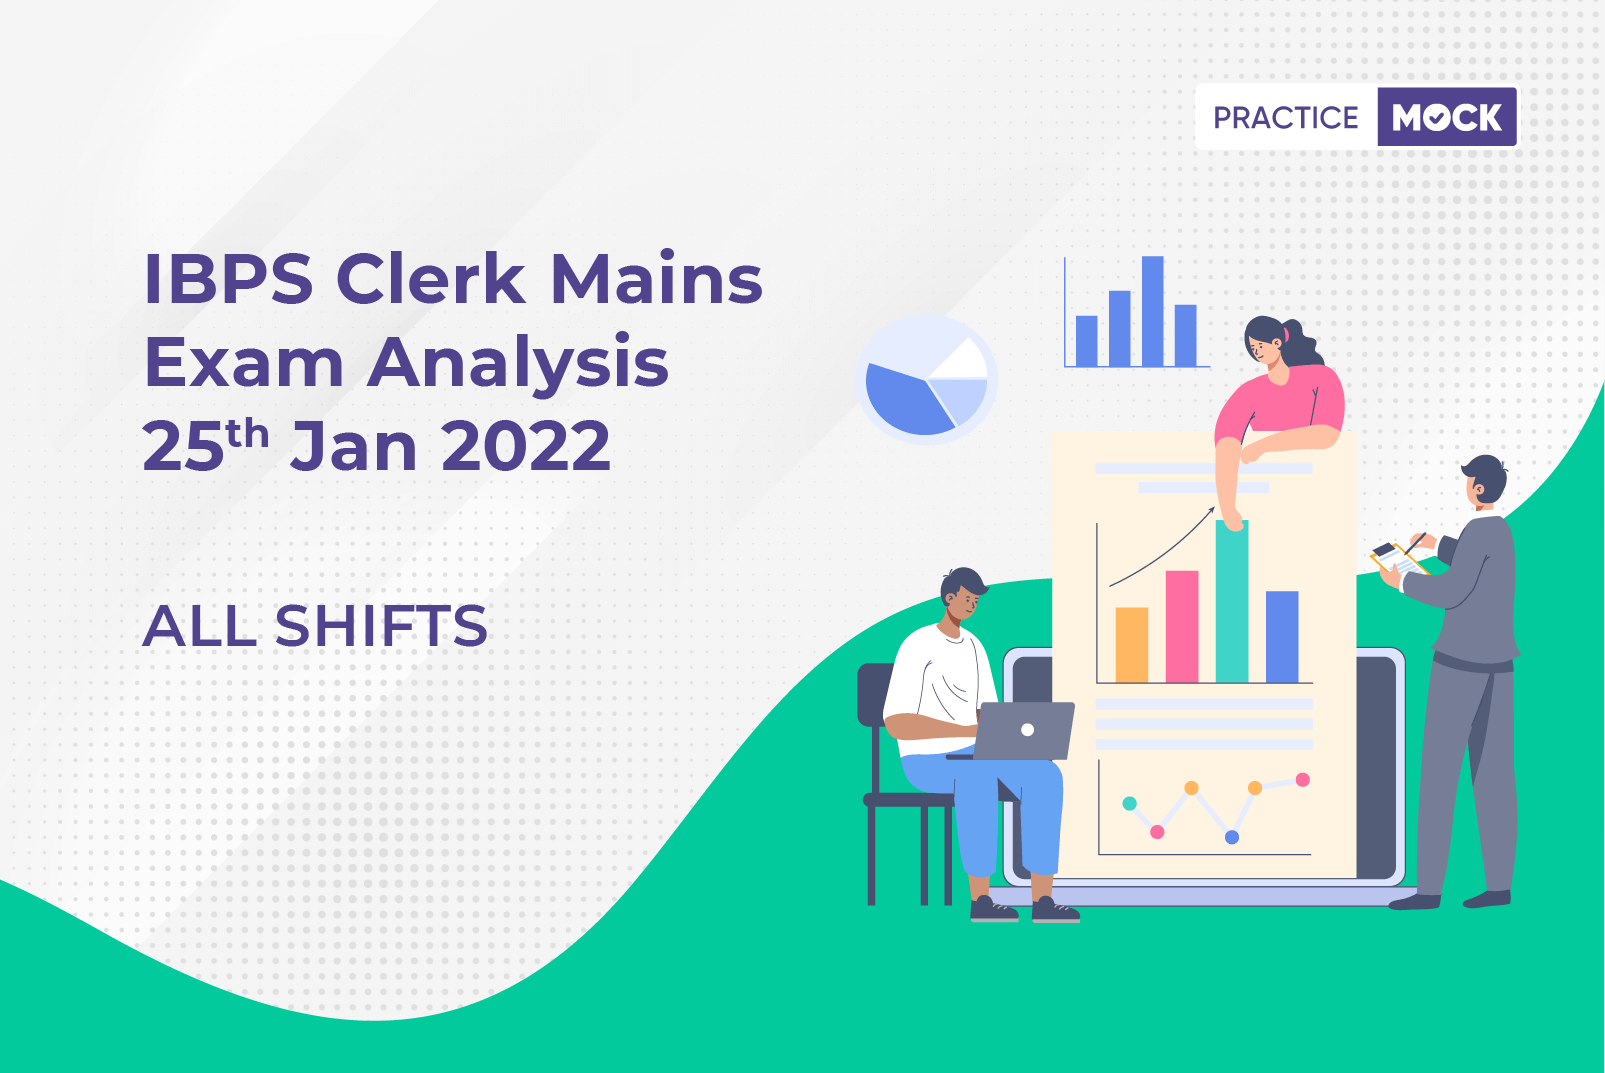 IBPS Clerk Mains Exam Analysis 25th Jan 2022 All Shifts PracticeMock